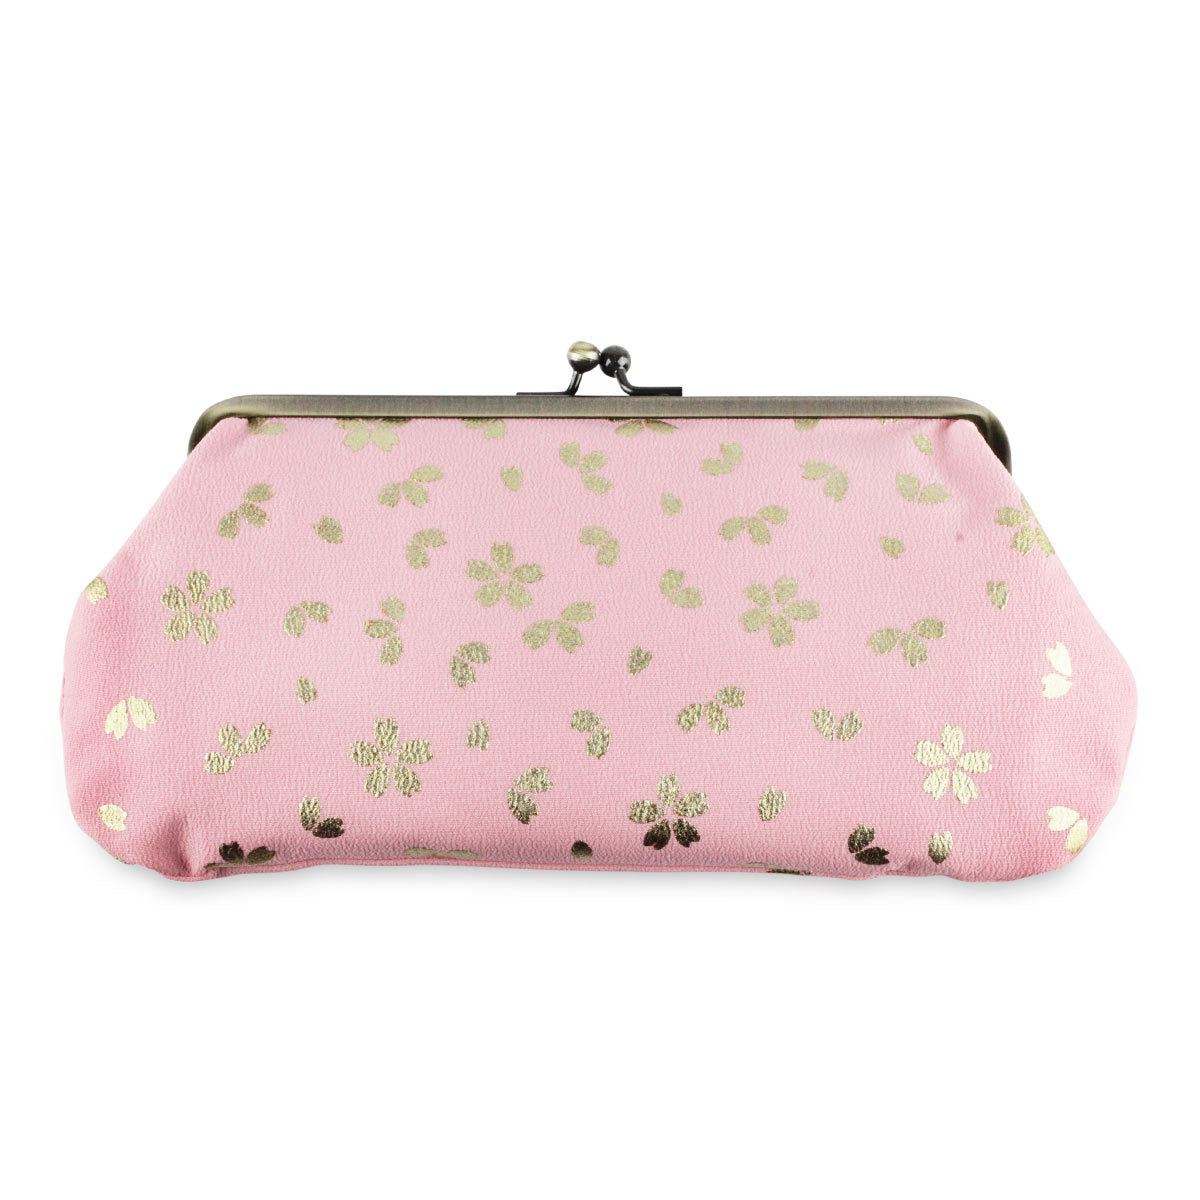 Primary image of Chidoriya Pink + Gold Kimono Clutch Bag 8.5 x 4  inches Bag